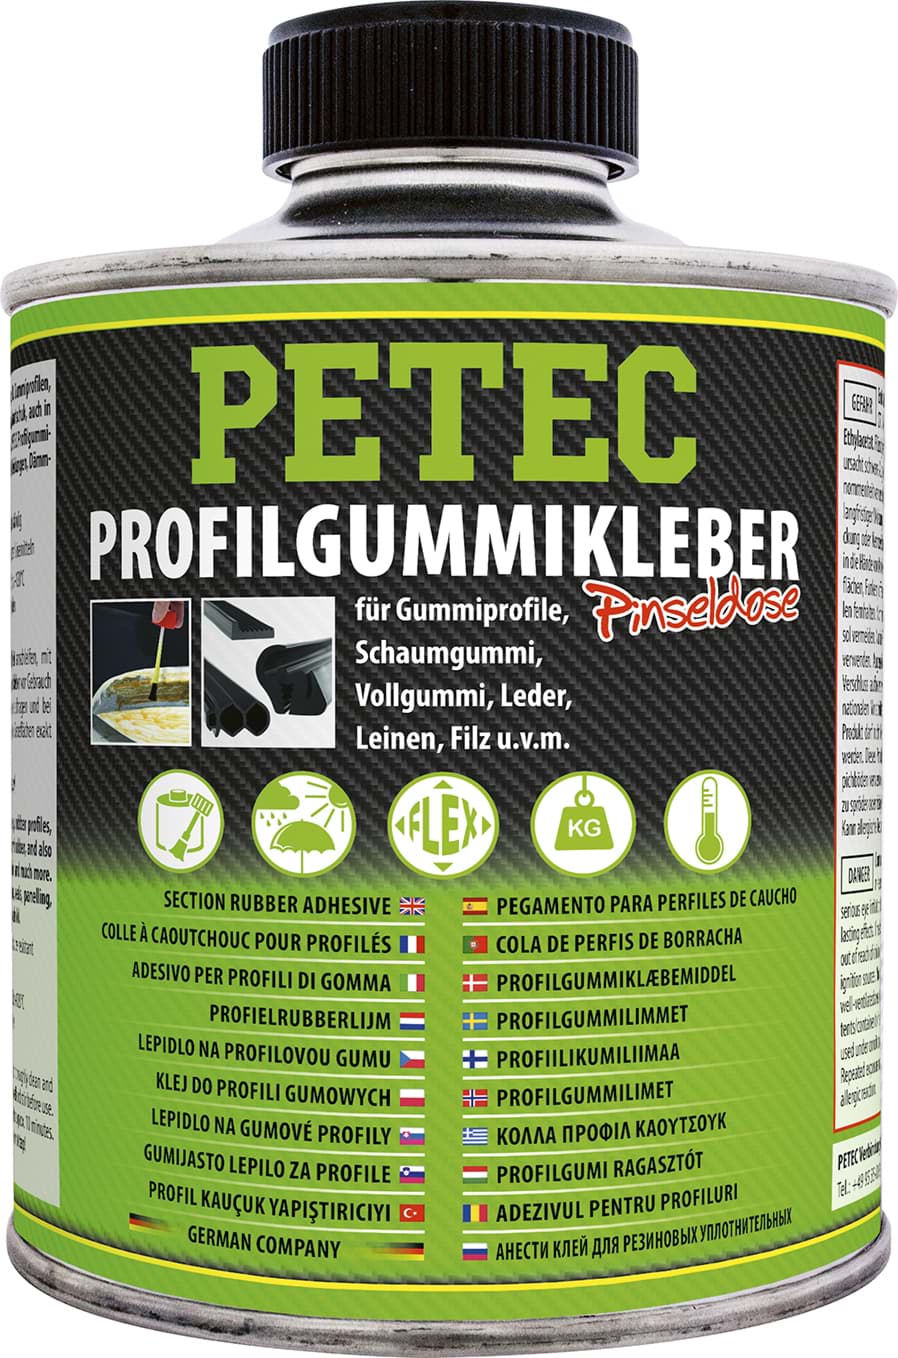 Picture of Petec Profilgummikleber Pinseldose Kontakt Kleber 350ml